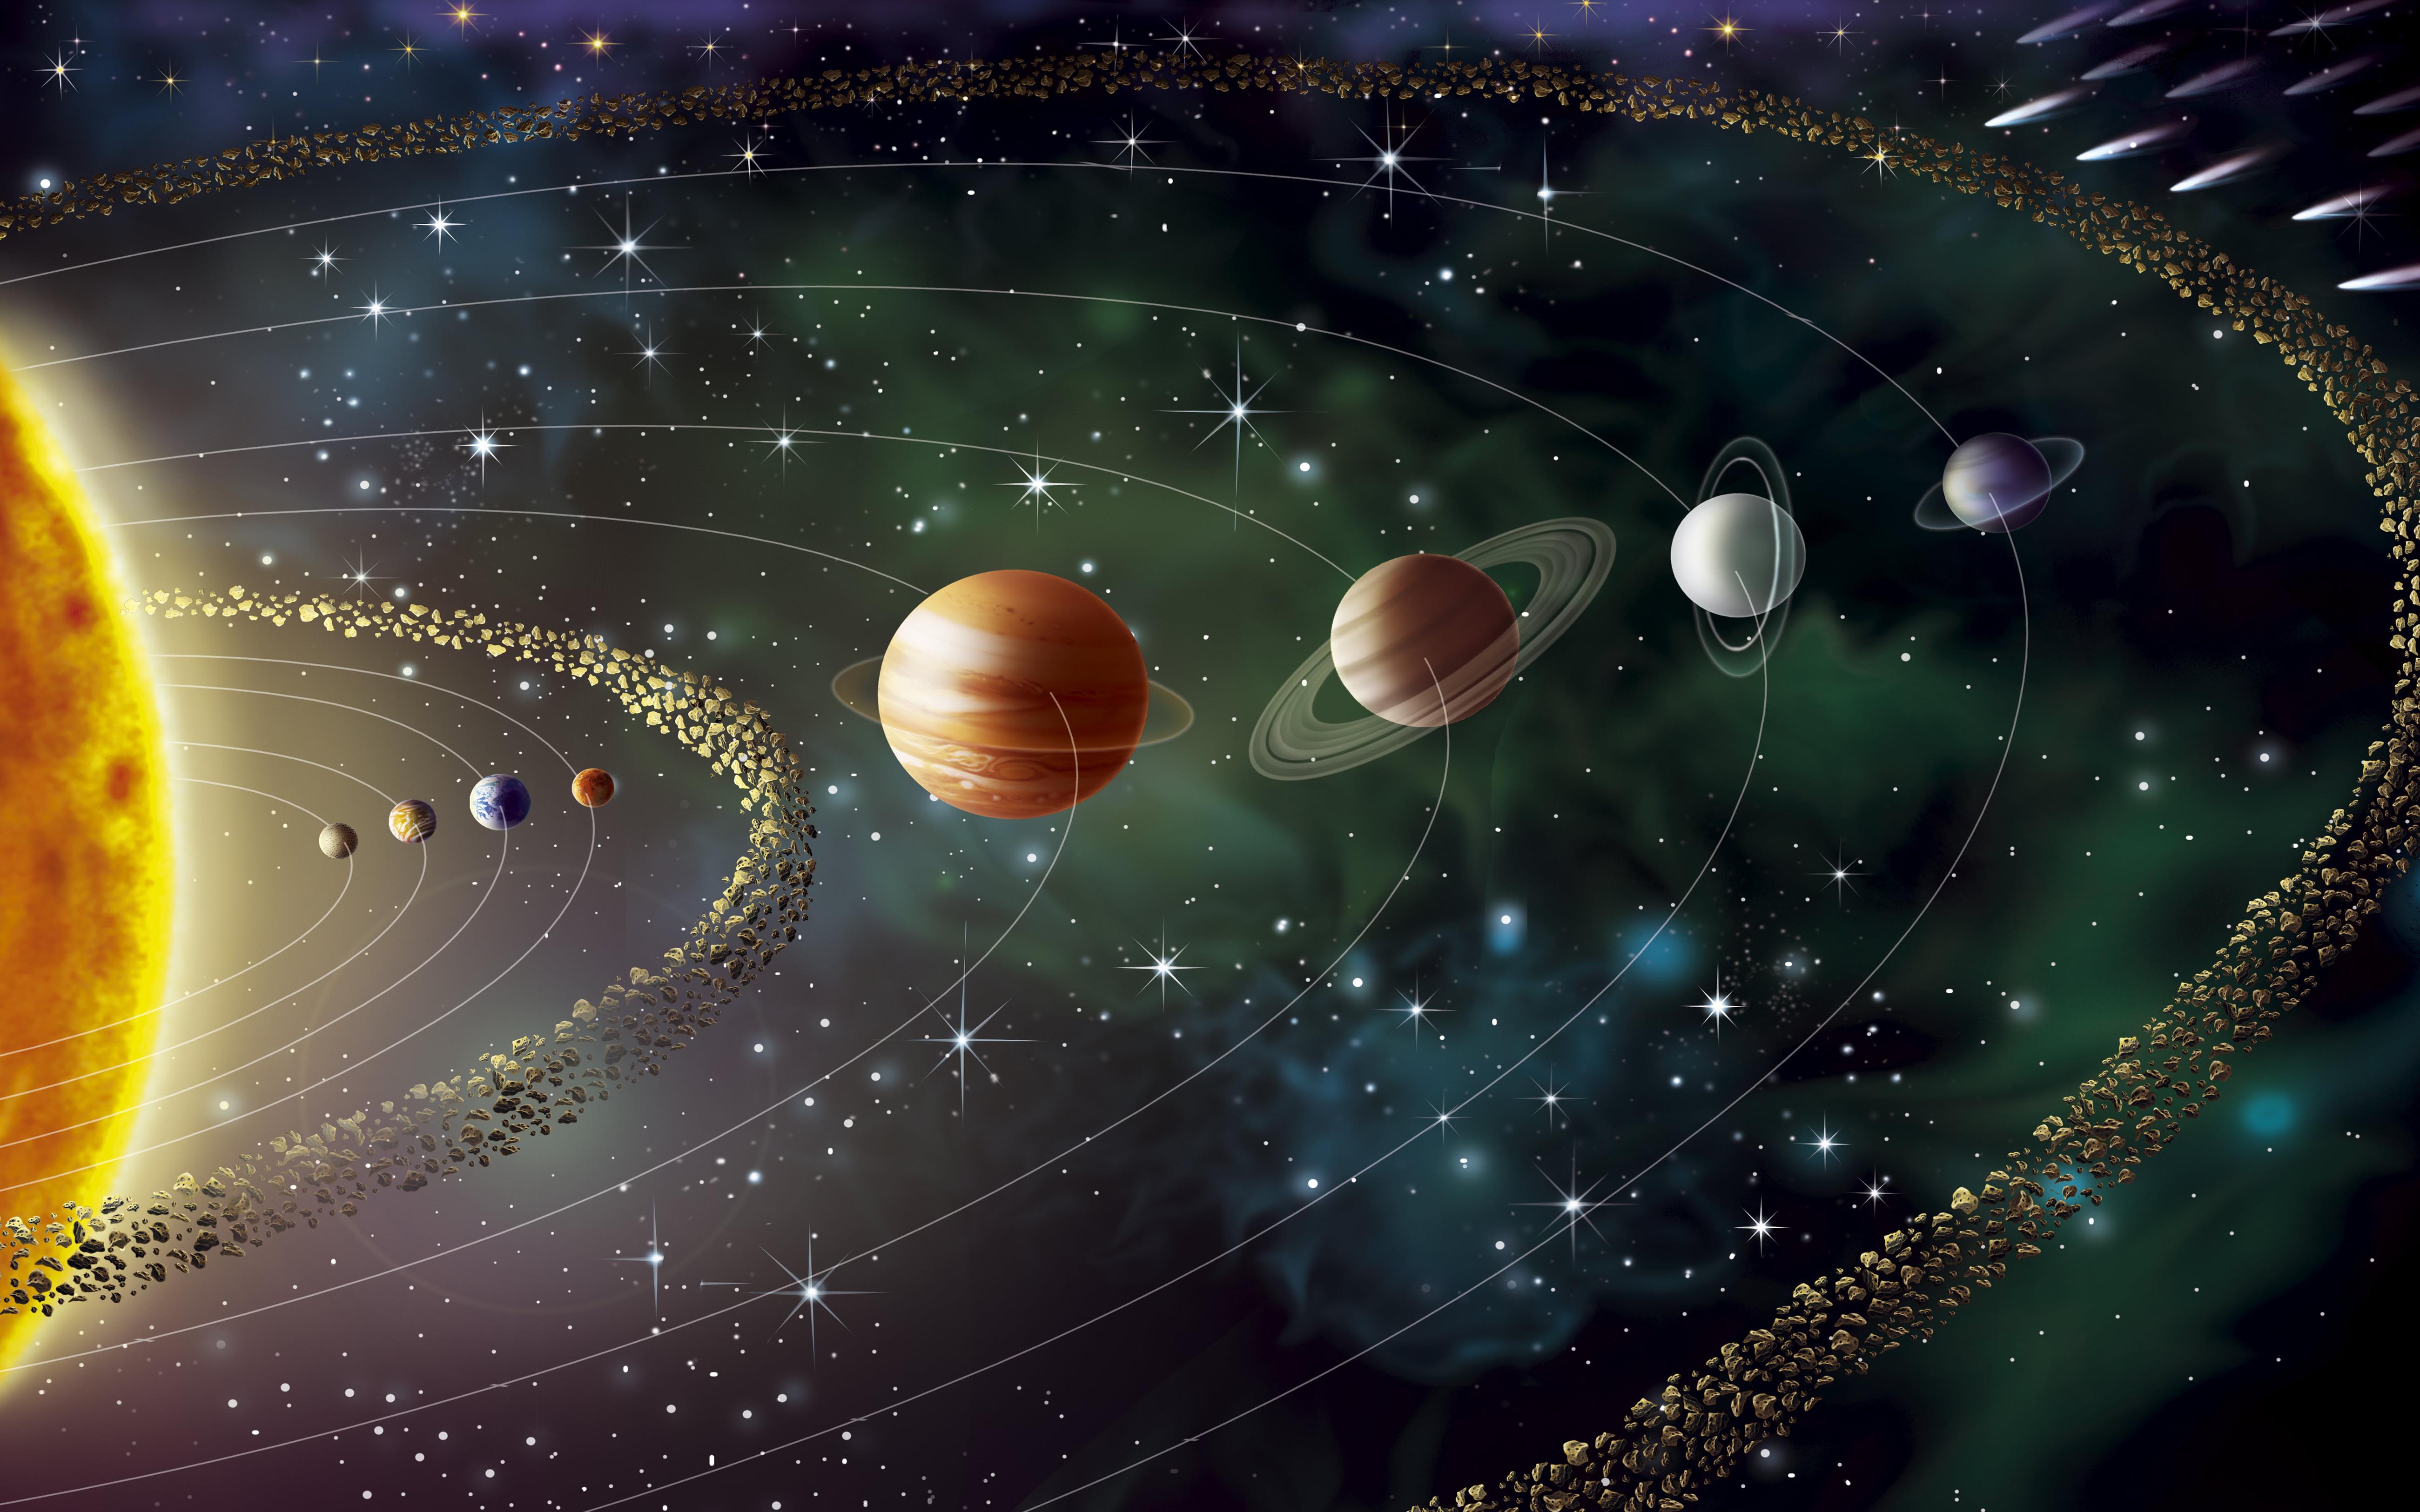 Solar System With Planets Mercury Venus Earth Mars Asteroid Belt Jupiter Sa...